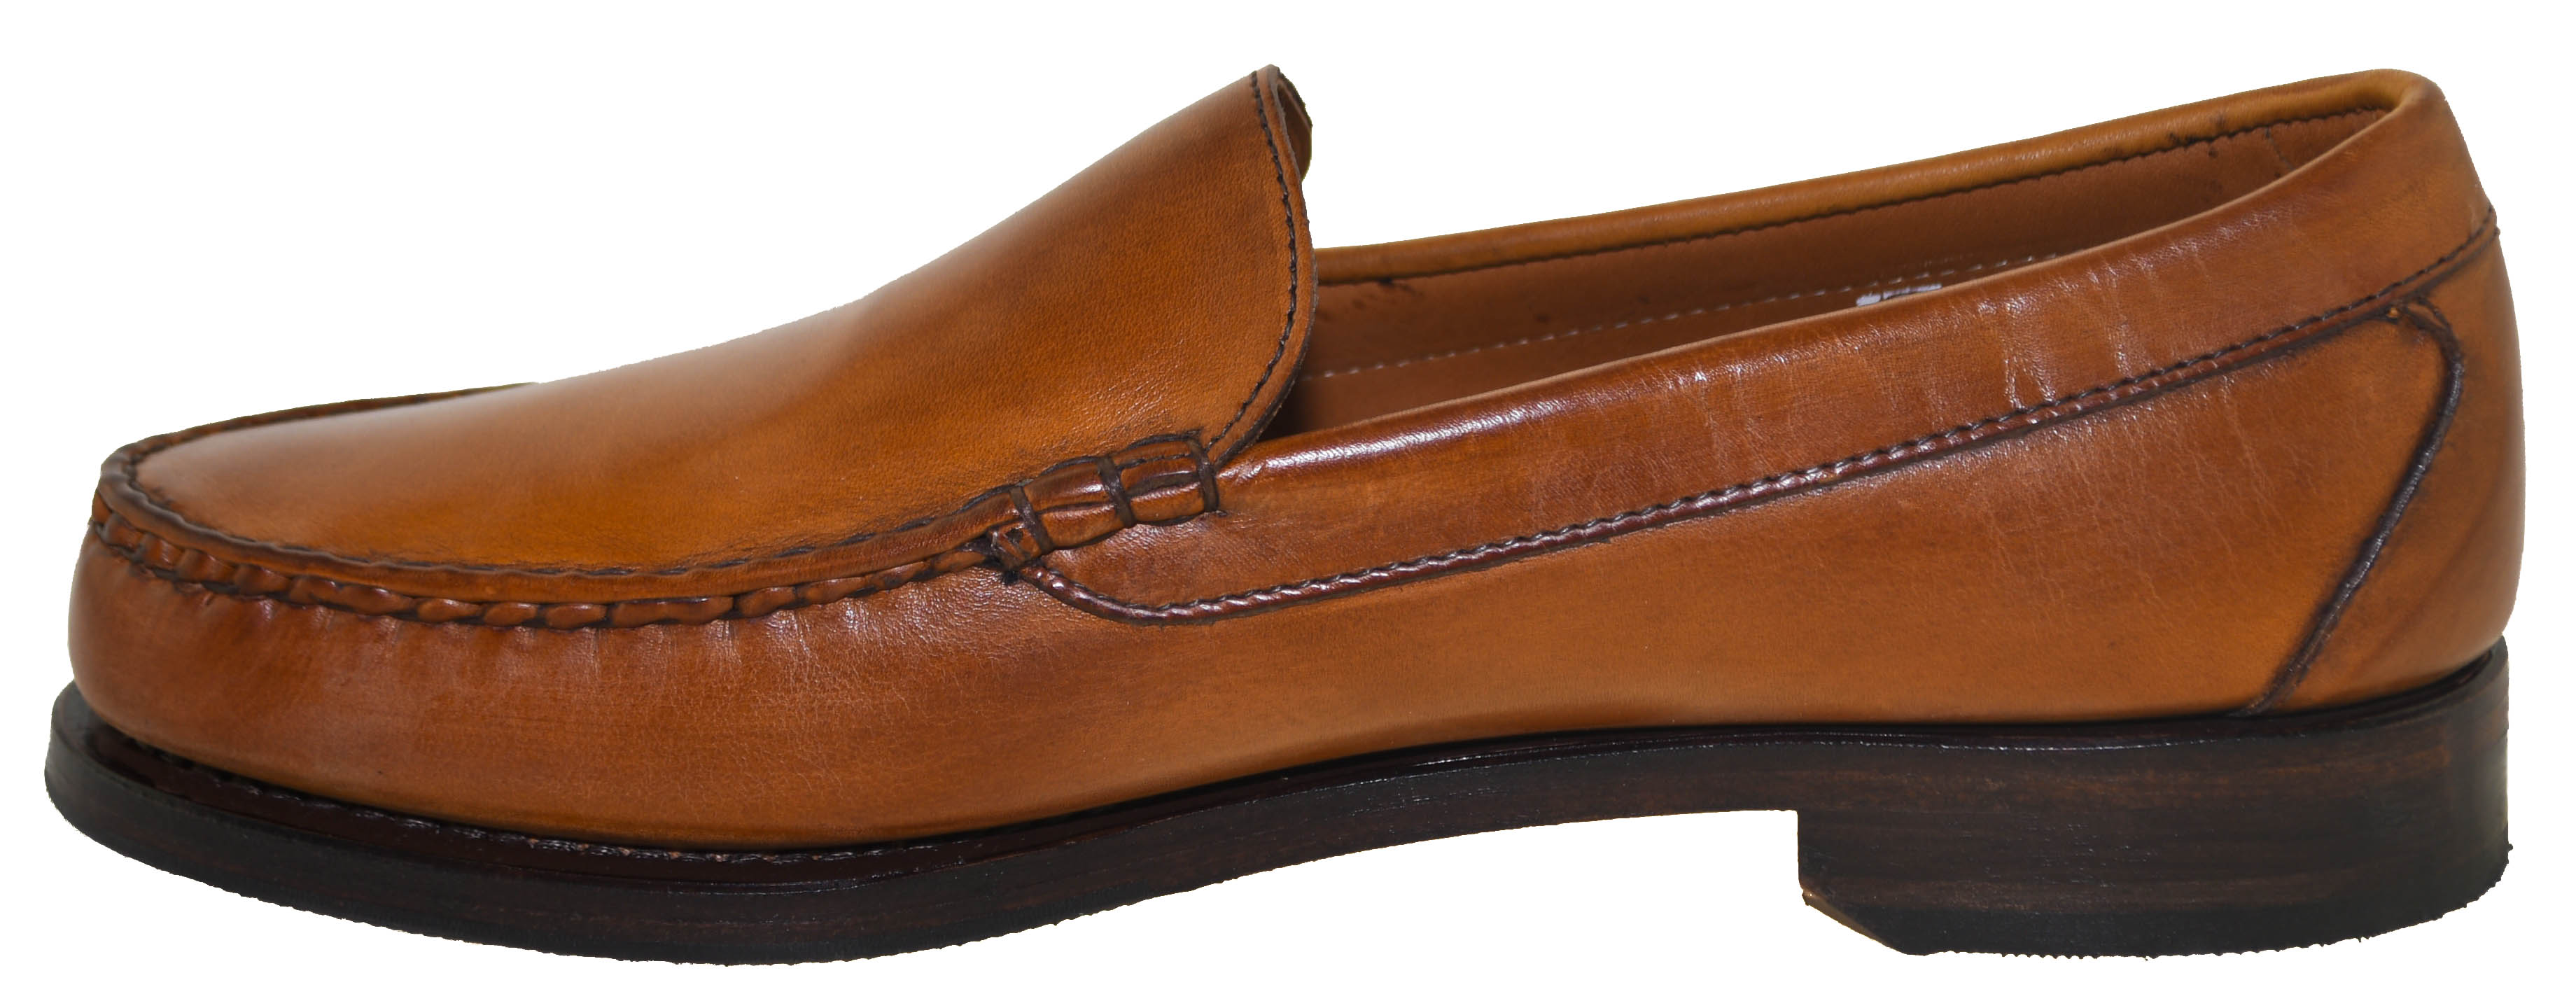 Allen Edmonds Men's Loafer Brown Style 21959 52943 | eBay